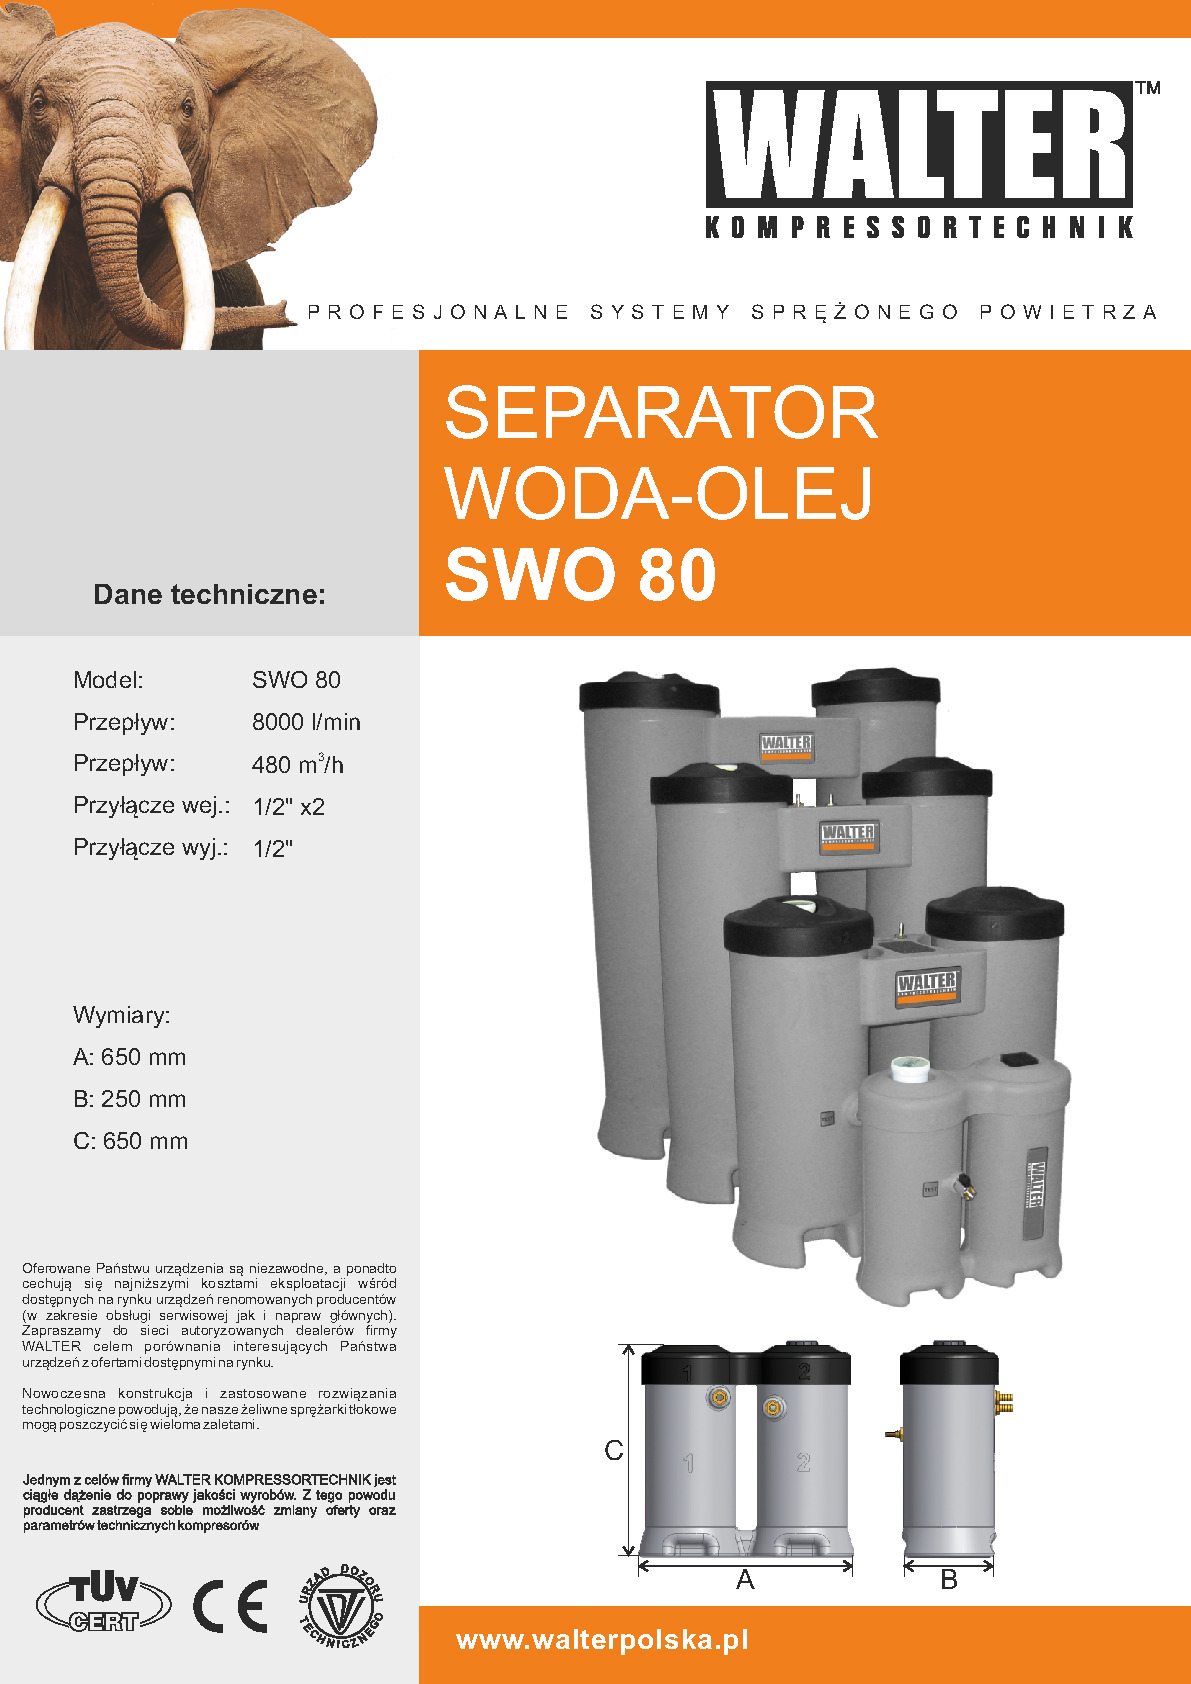 Separator SWO 80